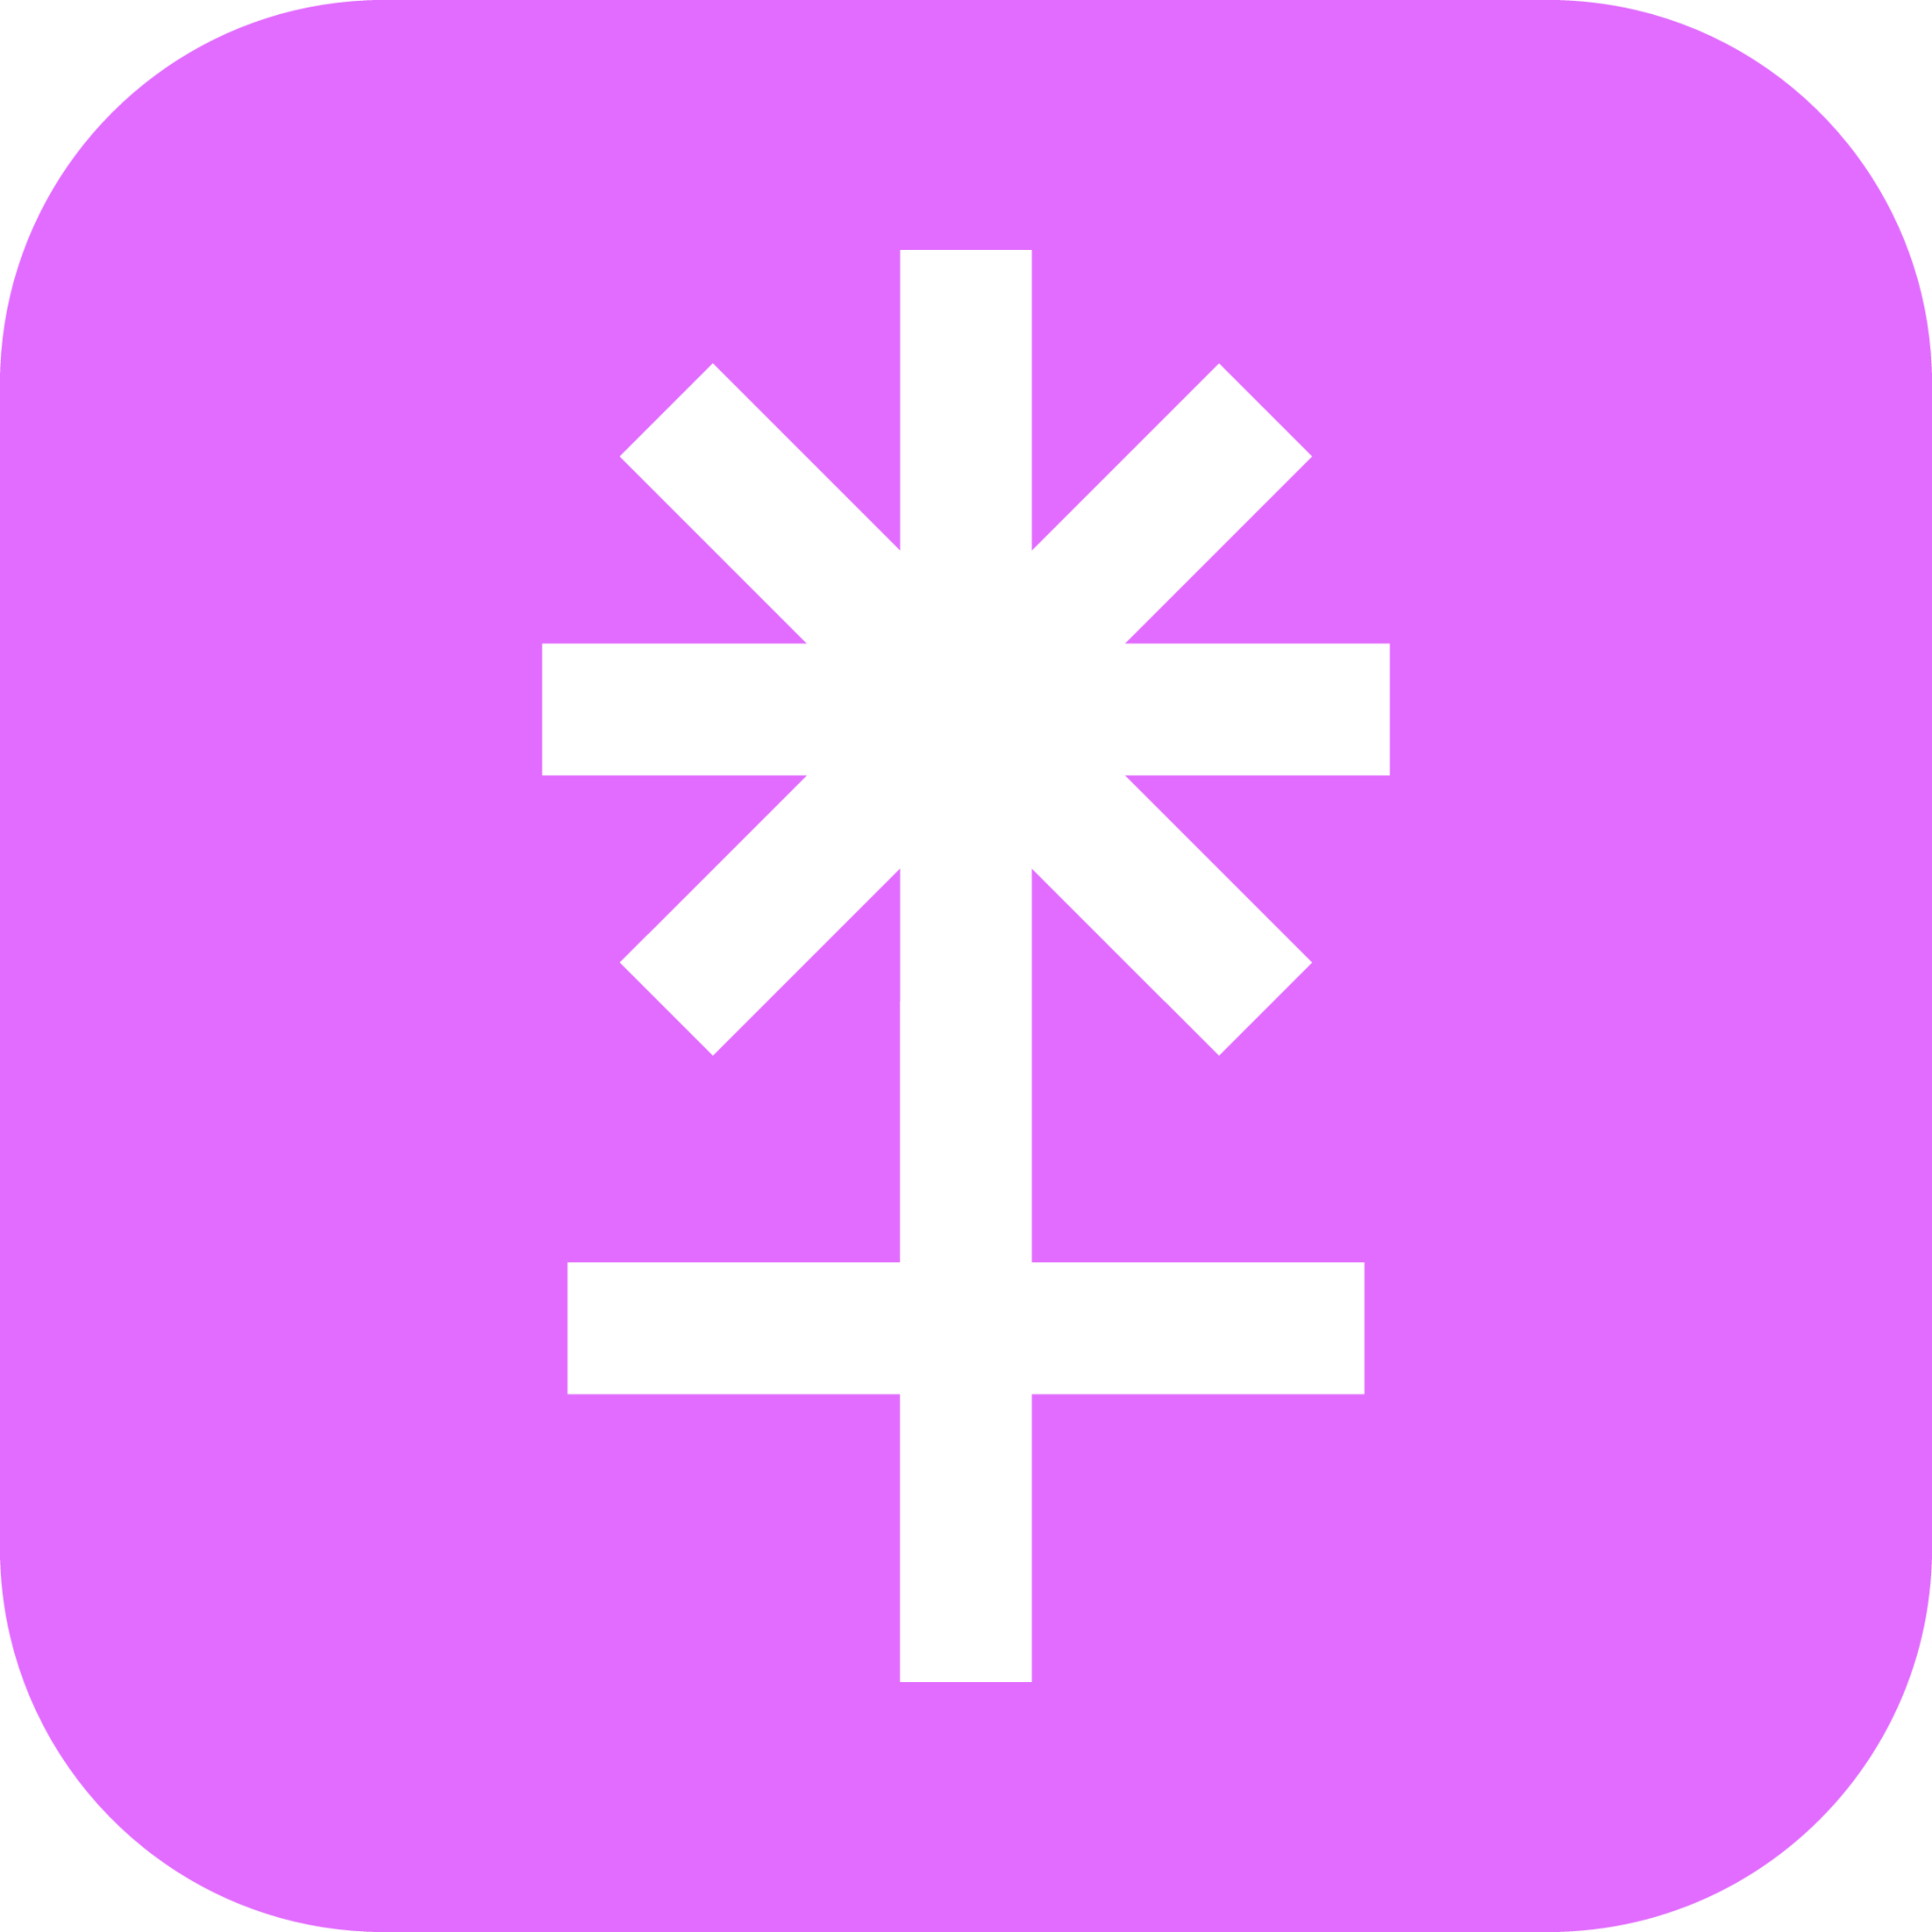 Juno emoji